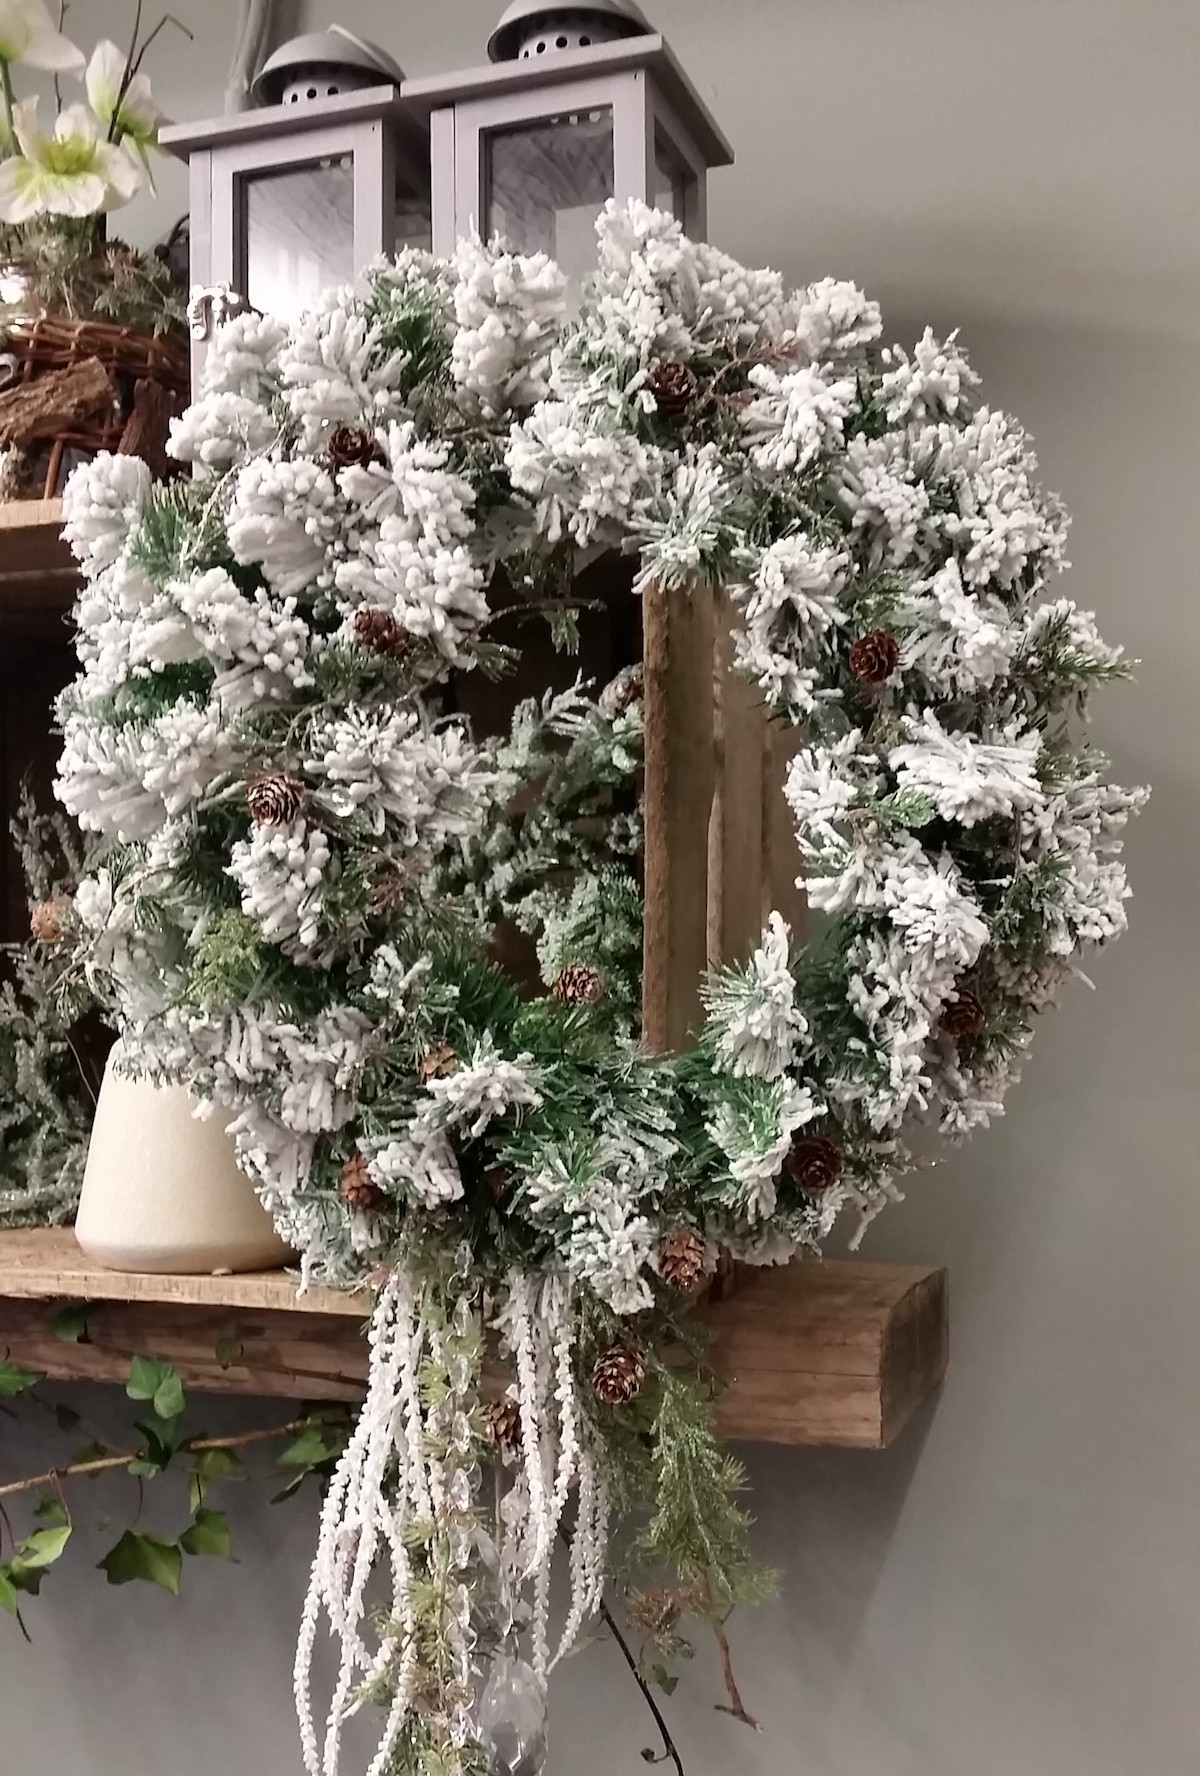 Christmas in Ballymena - Sally's Florist